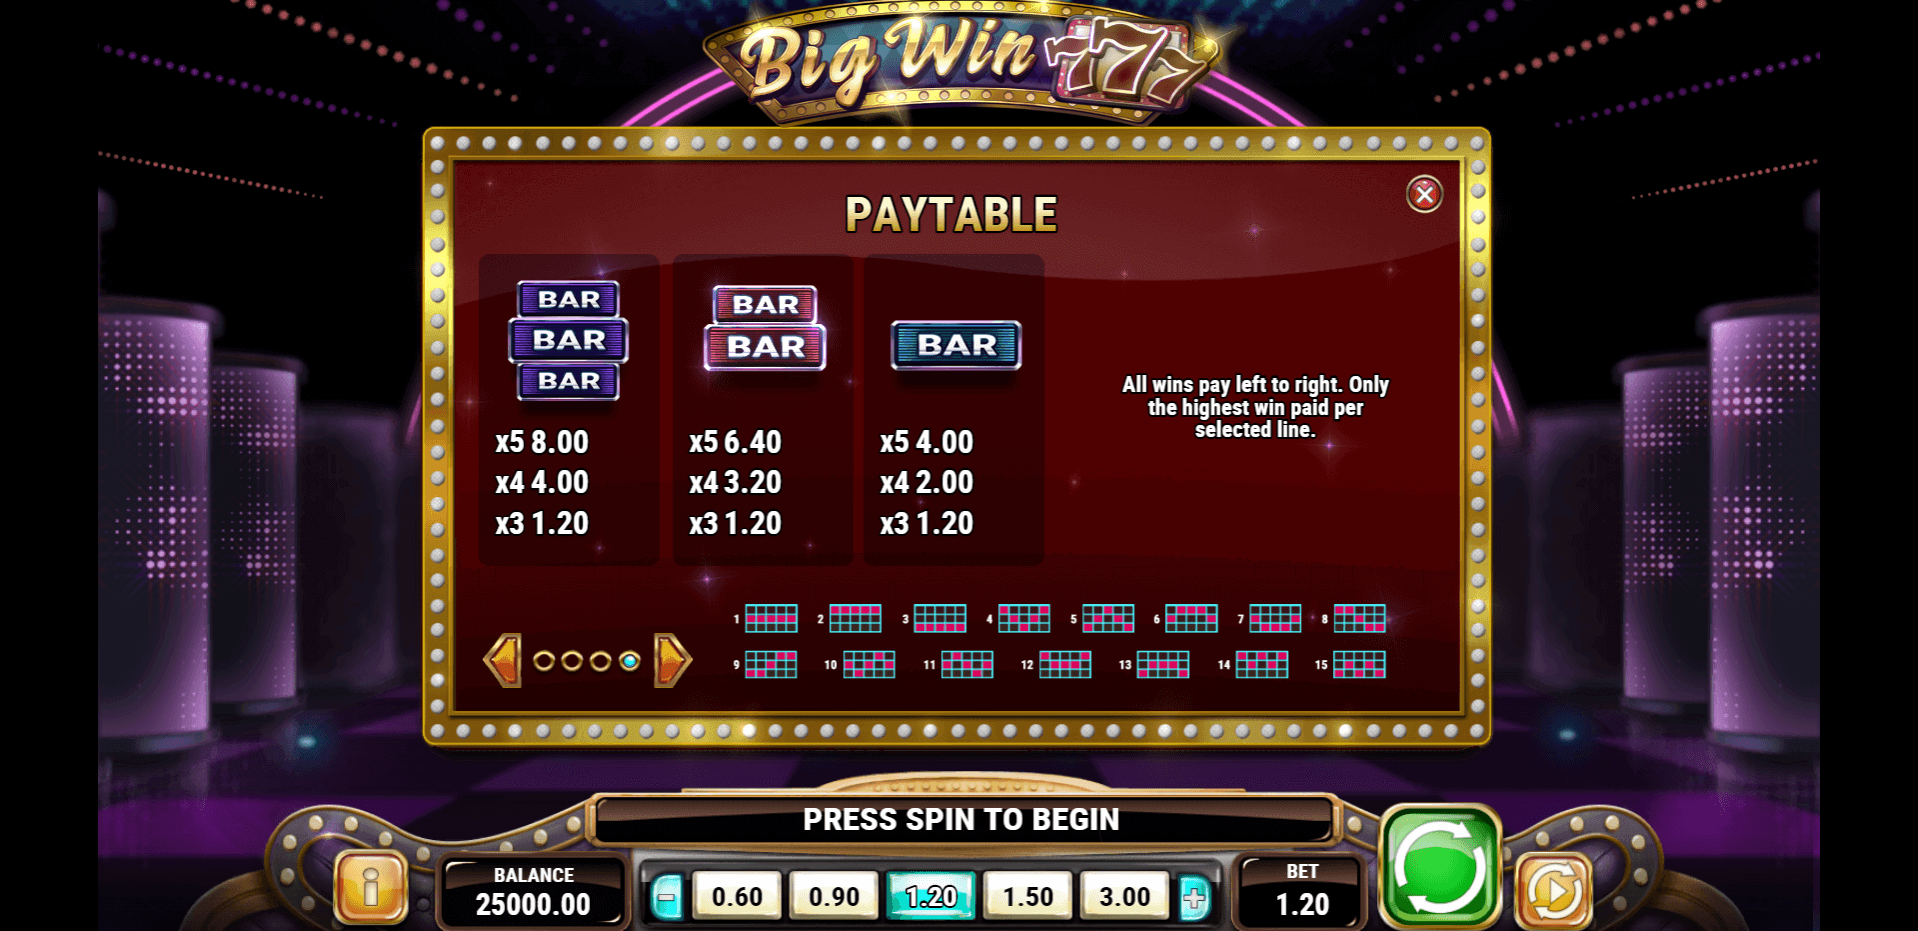 big win 777 slot machine detail image 3